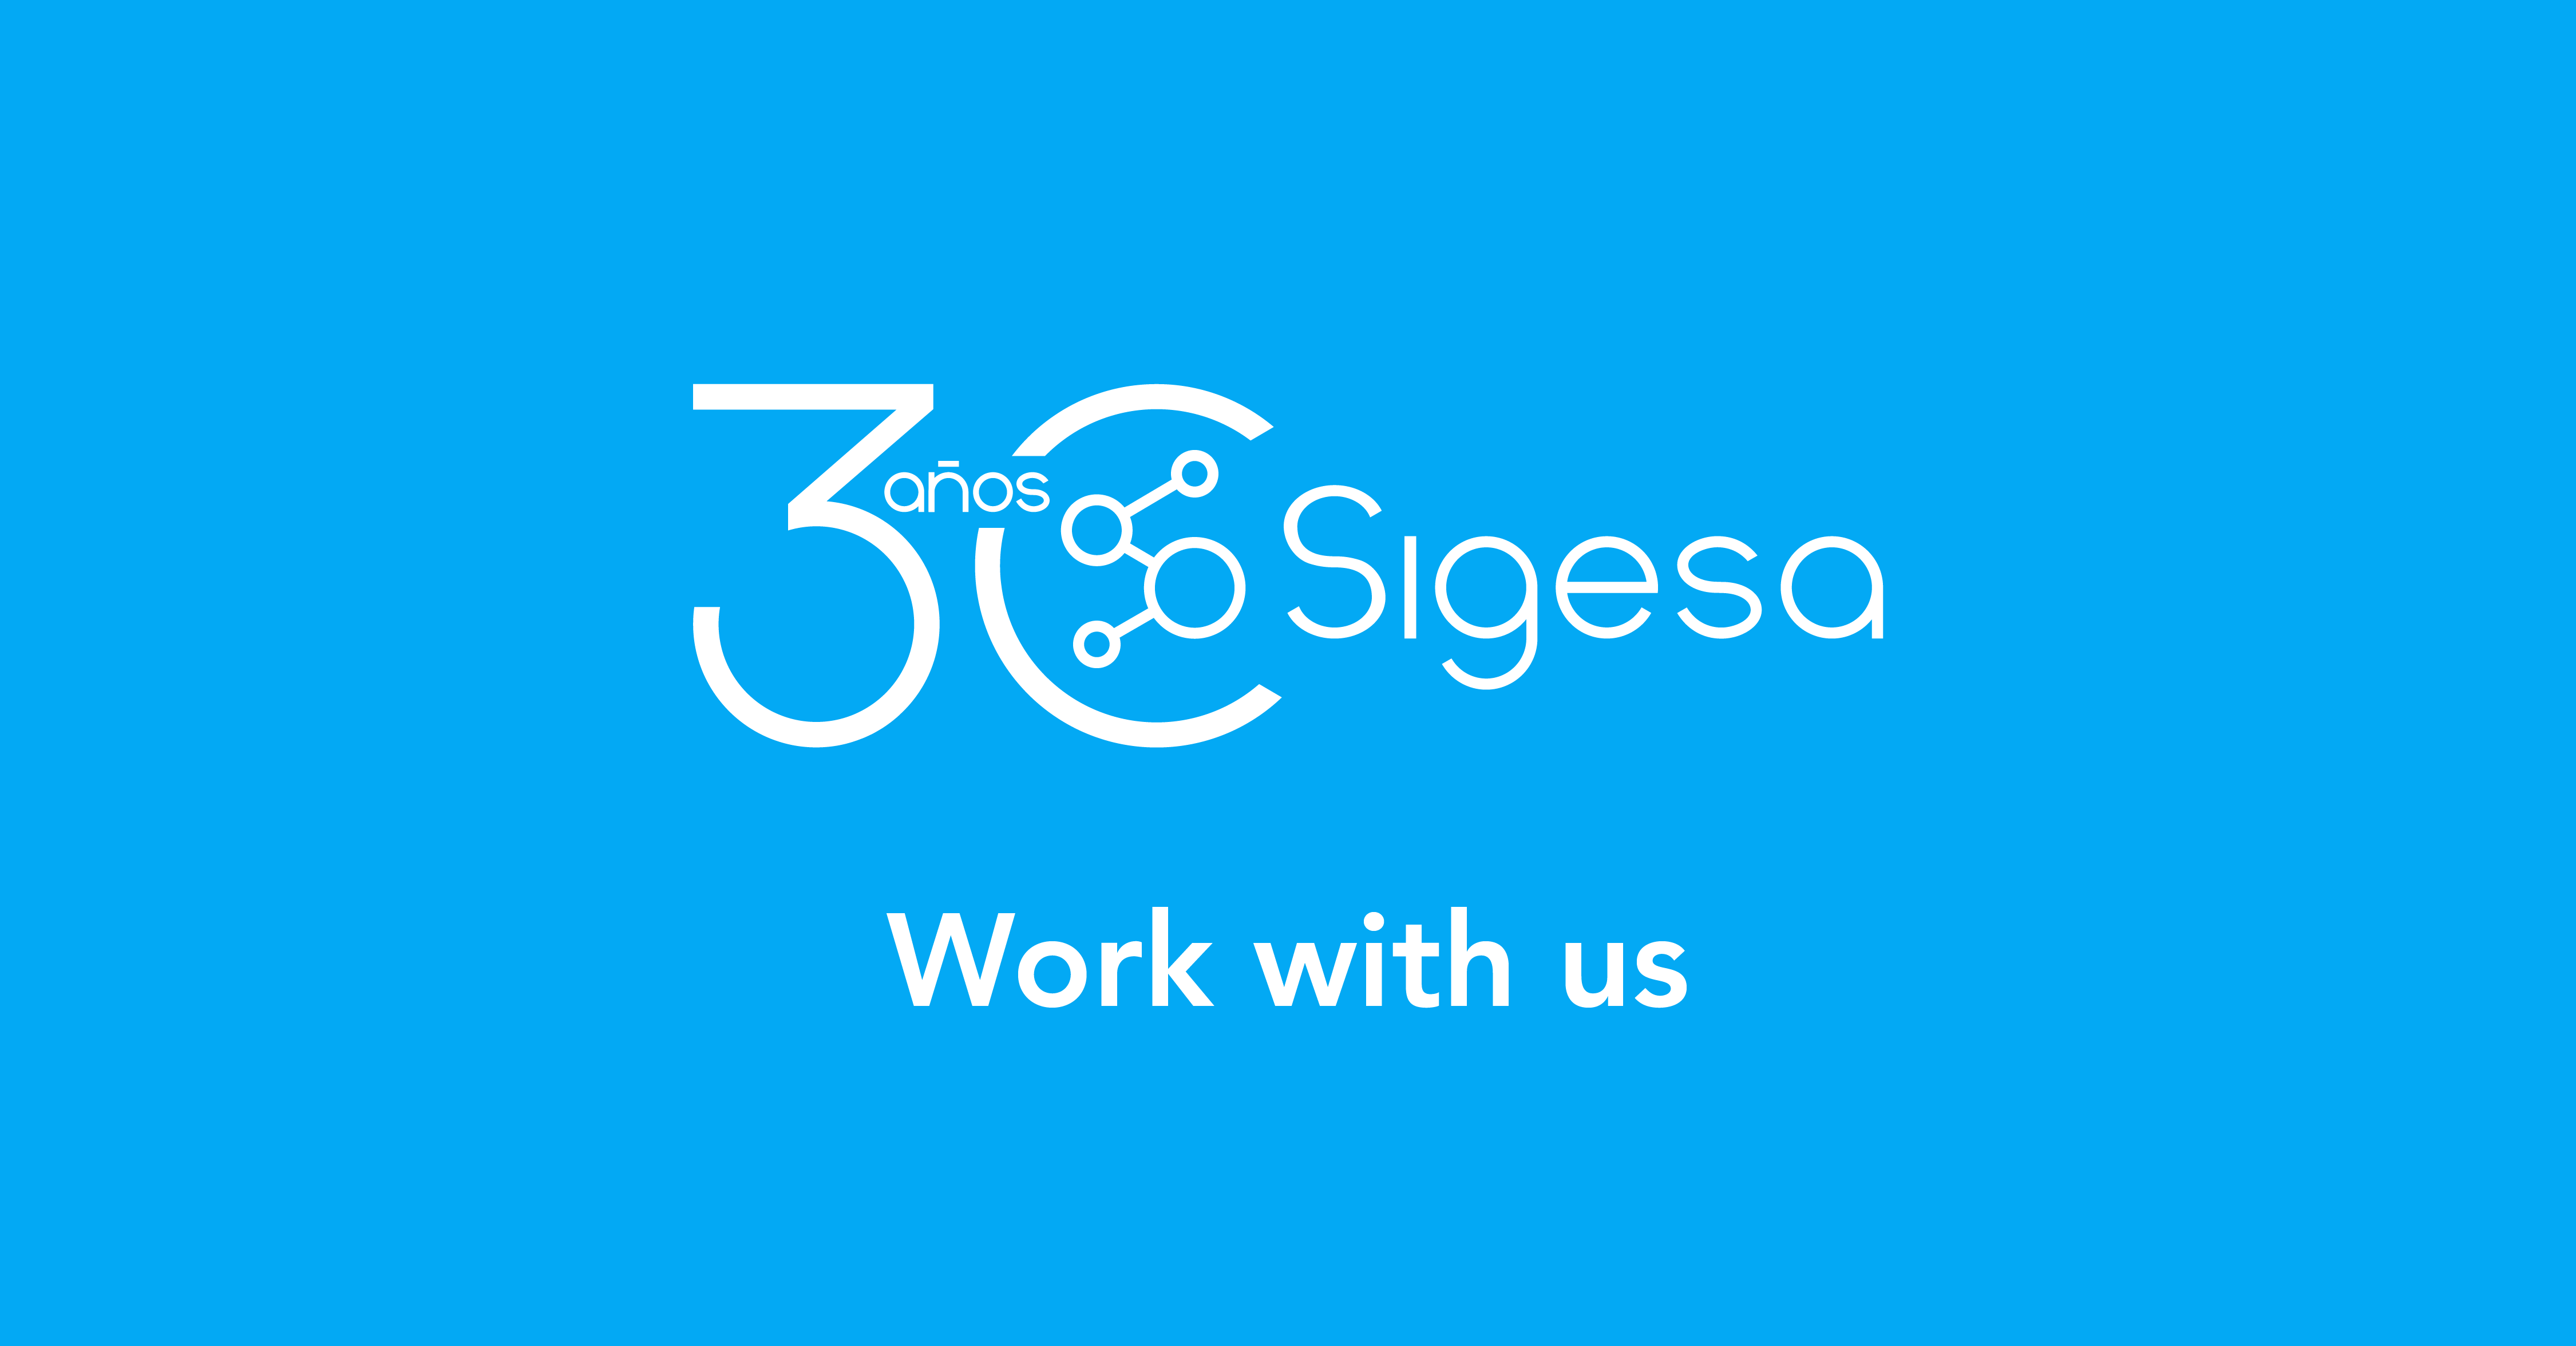 Sigesa Work with Us